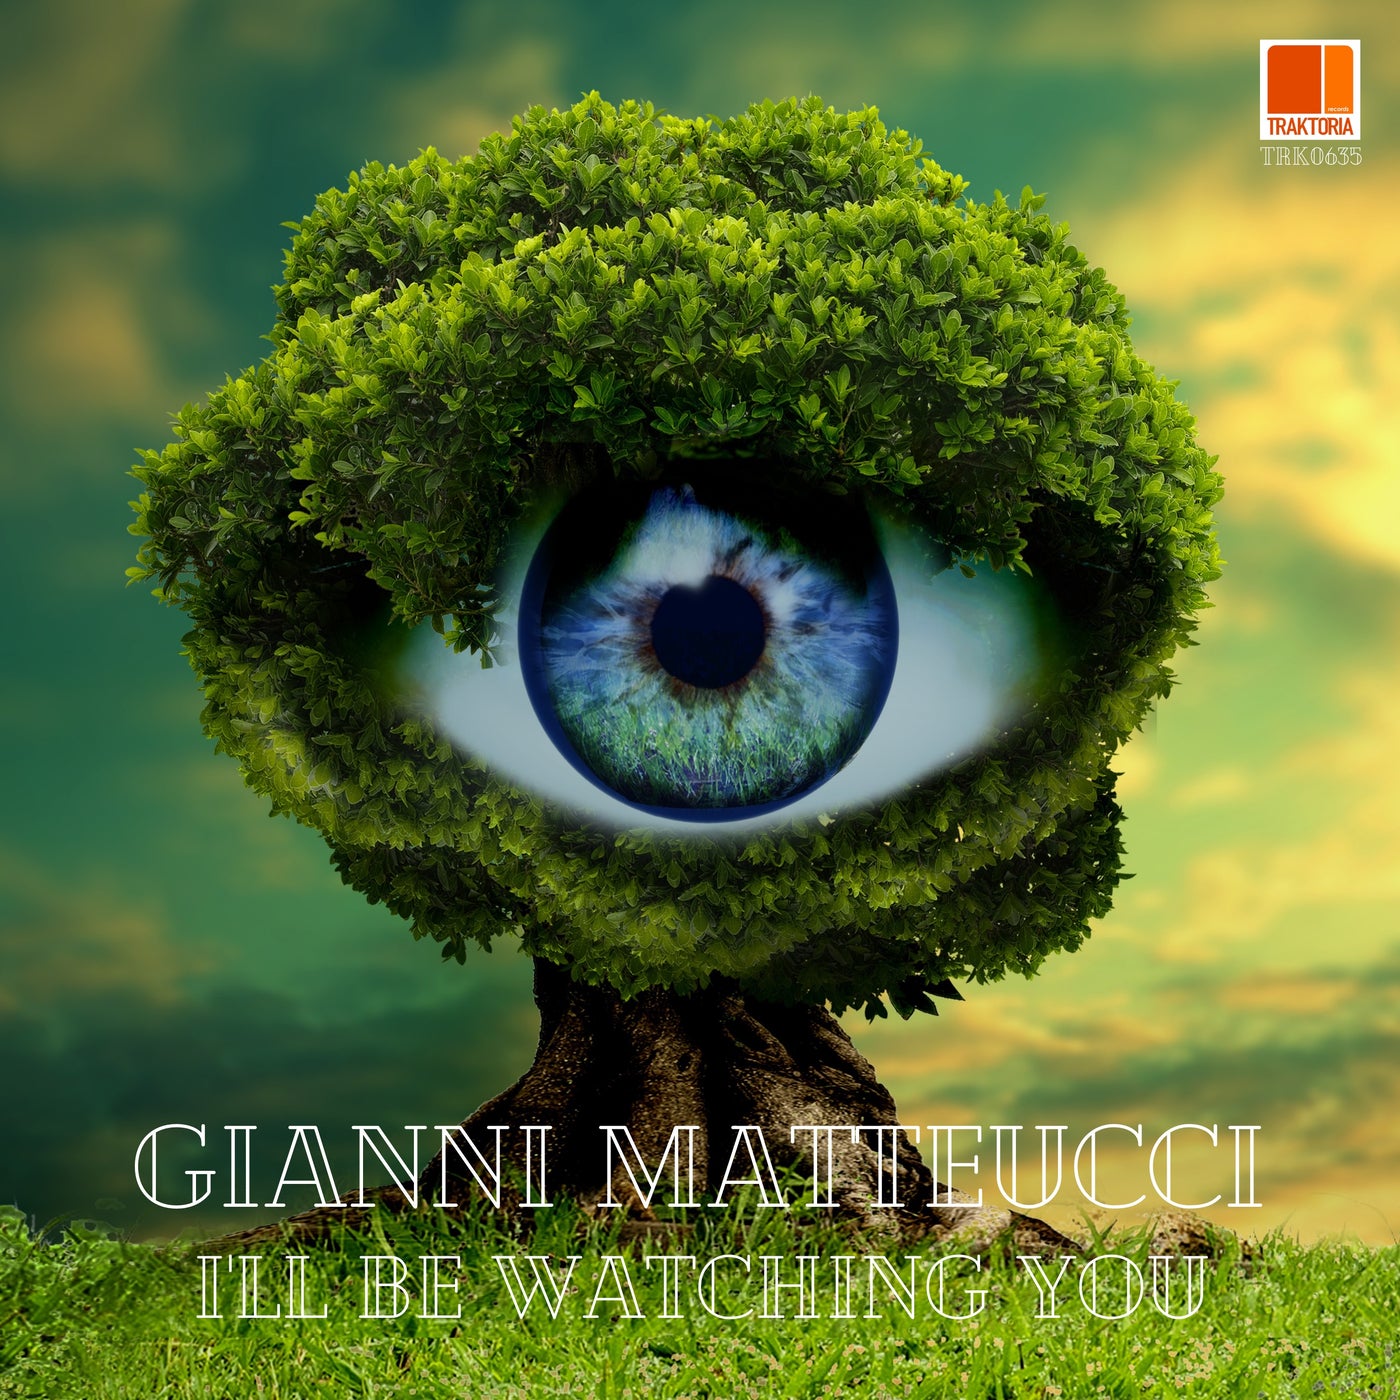 Gianni Matteucci - I'll be watching you [TRK0635]